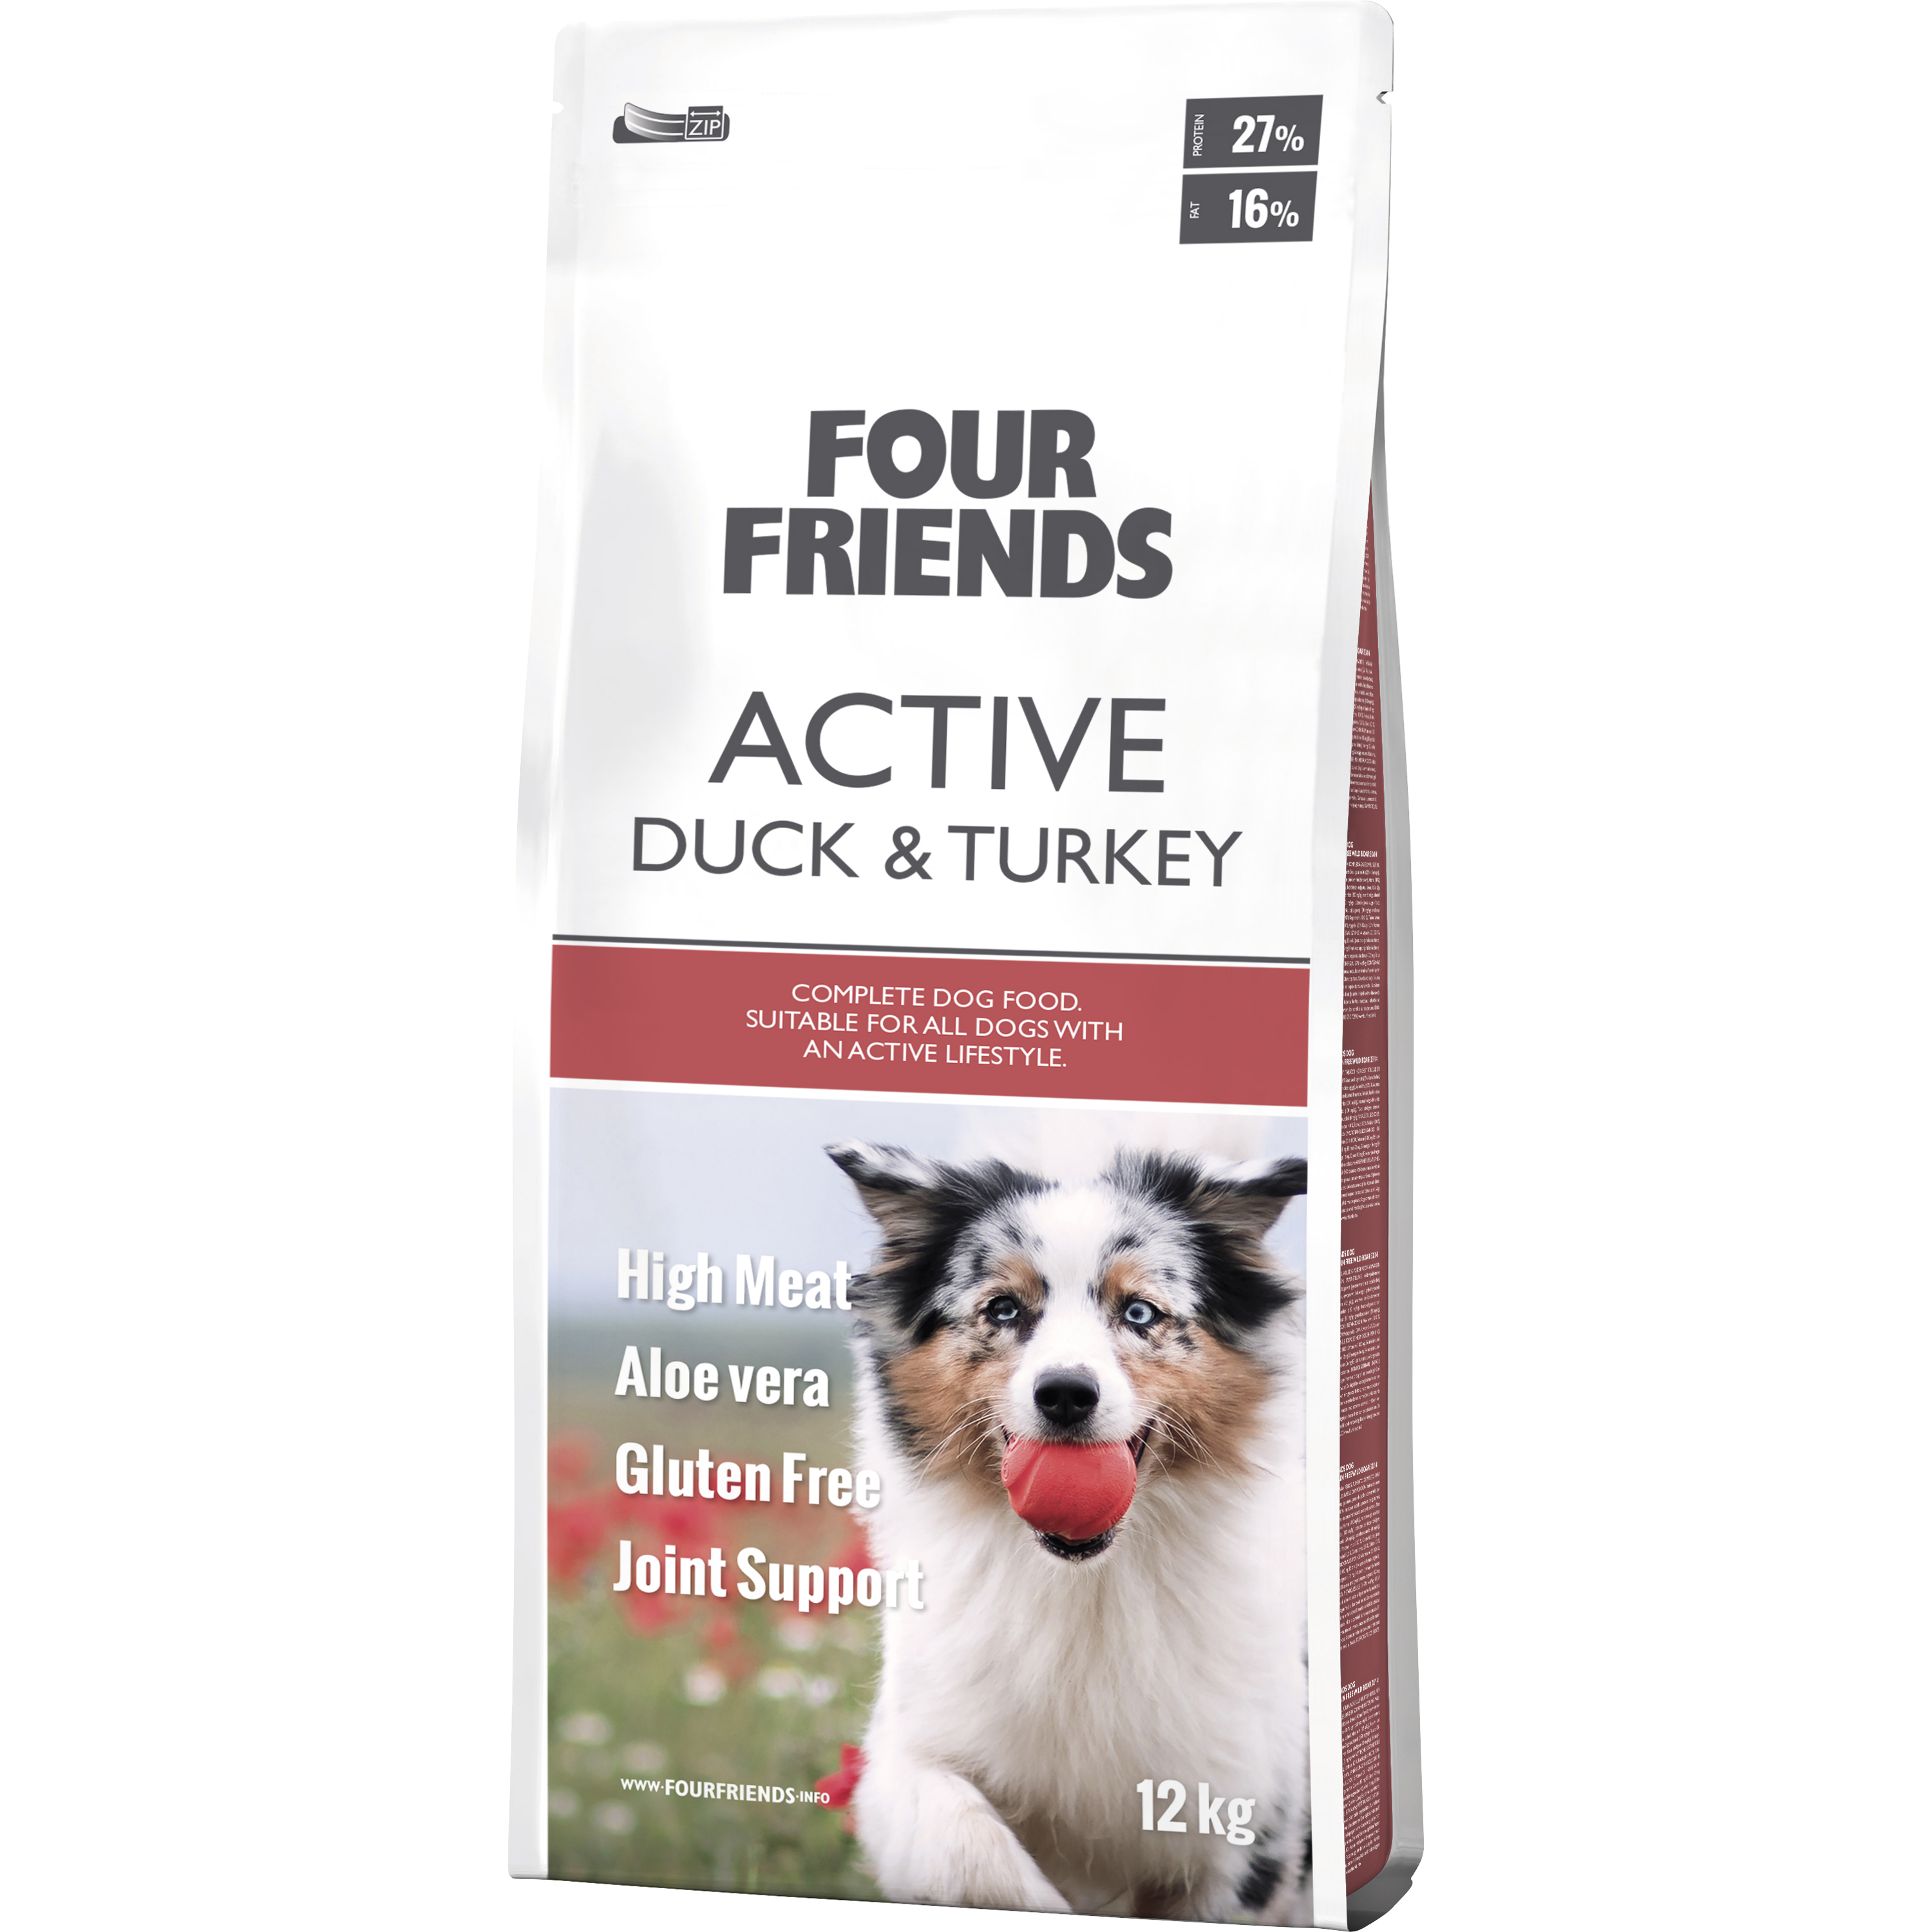 Hundfoder Four Friends Sens. High Calorie Duck & Turkey 12kg